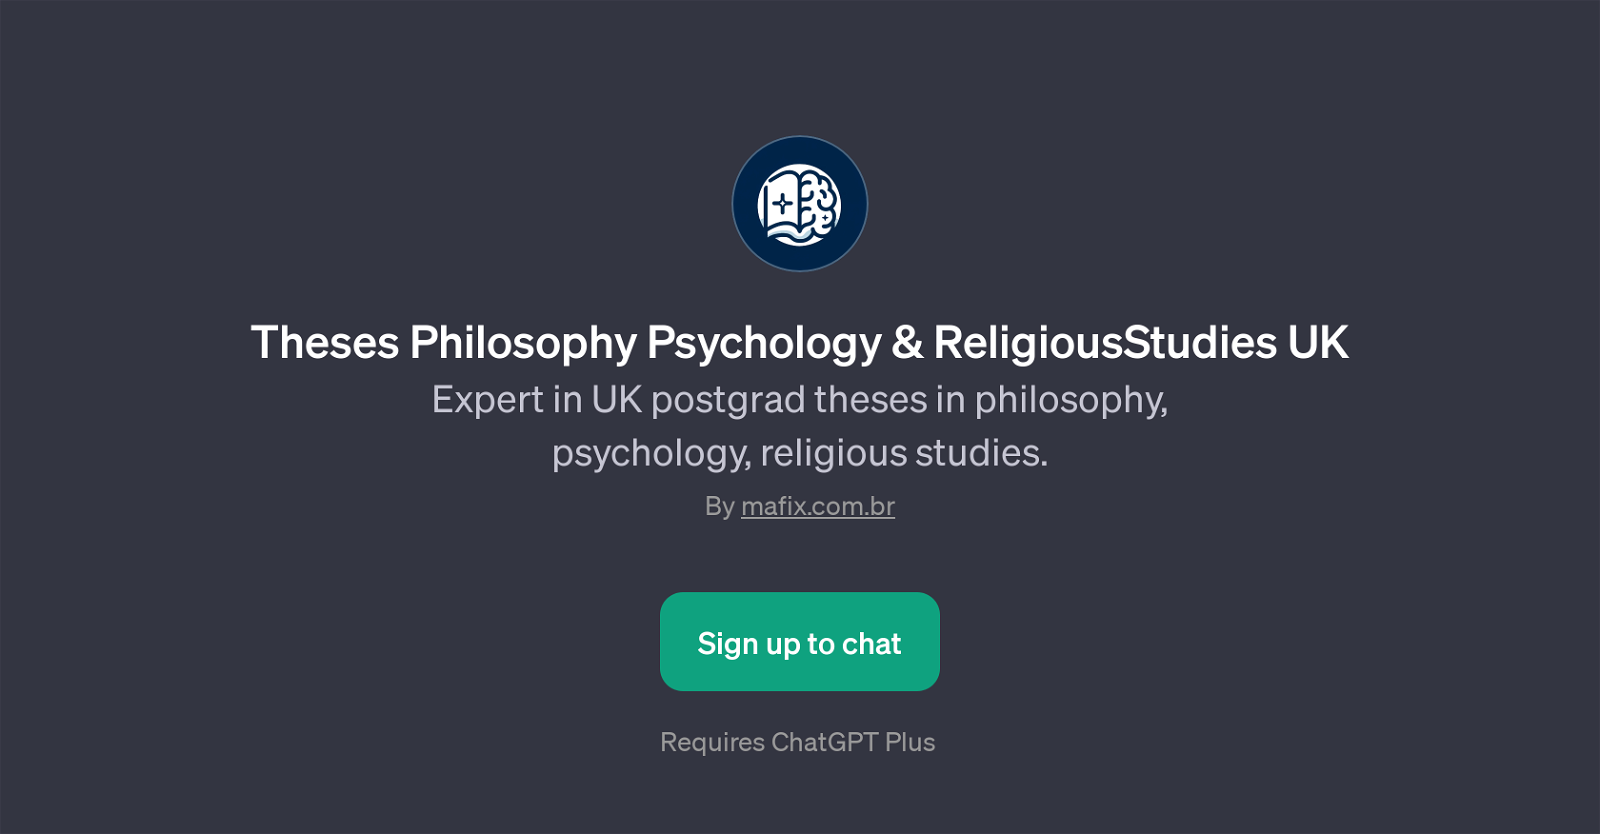 Theses Philosophy Psychology & Religious Studies UK website